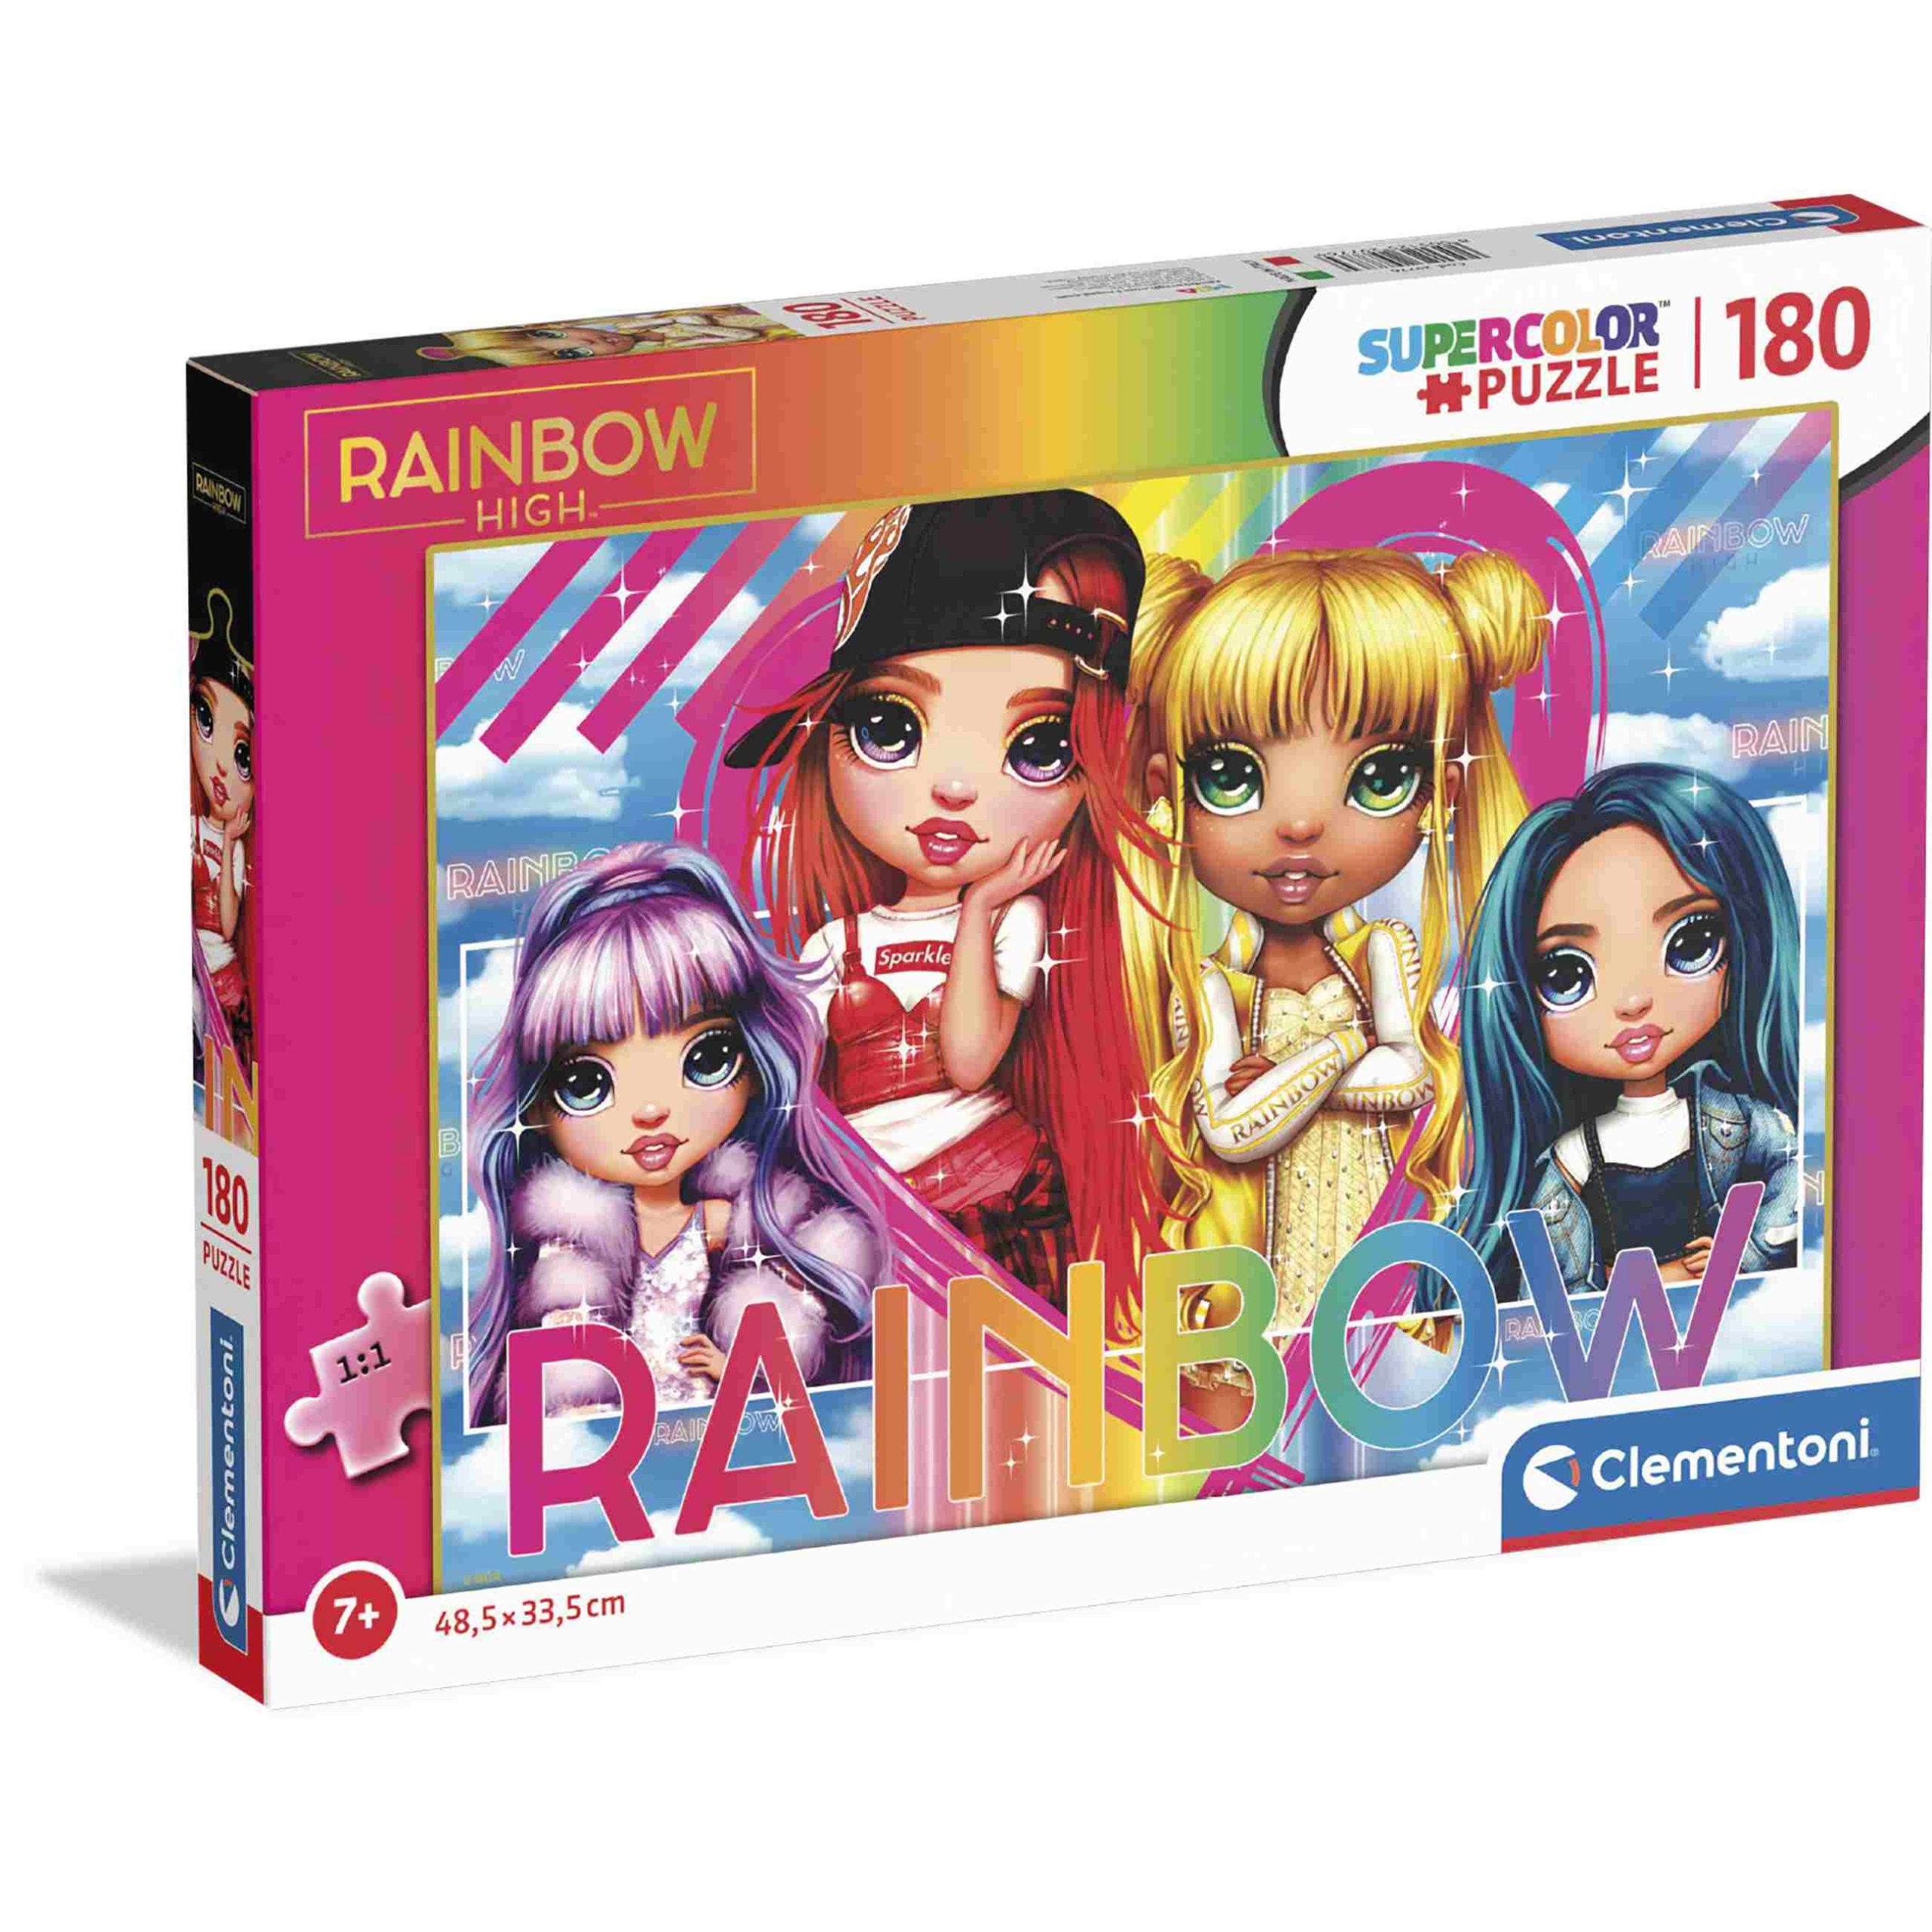 Clementoni supercolor puzzle rainbow high - 180 pezzi - CLEMENTONI, Rainbow High